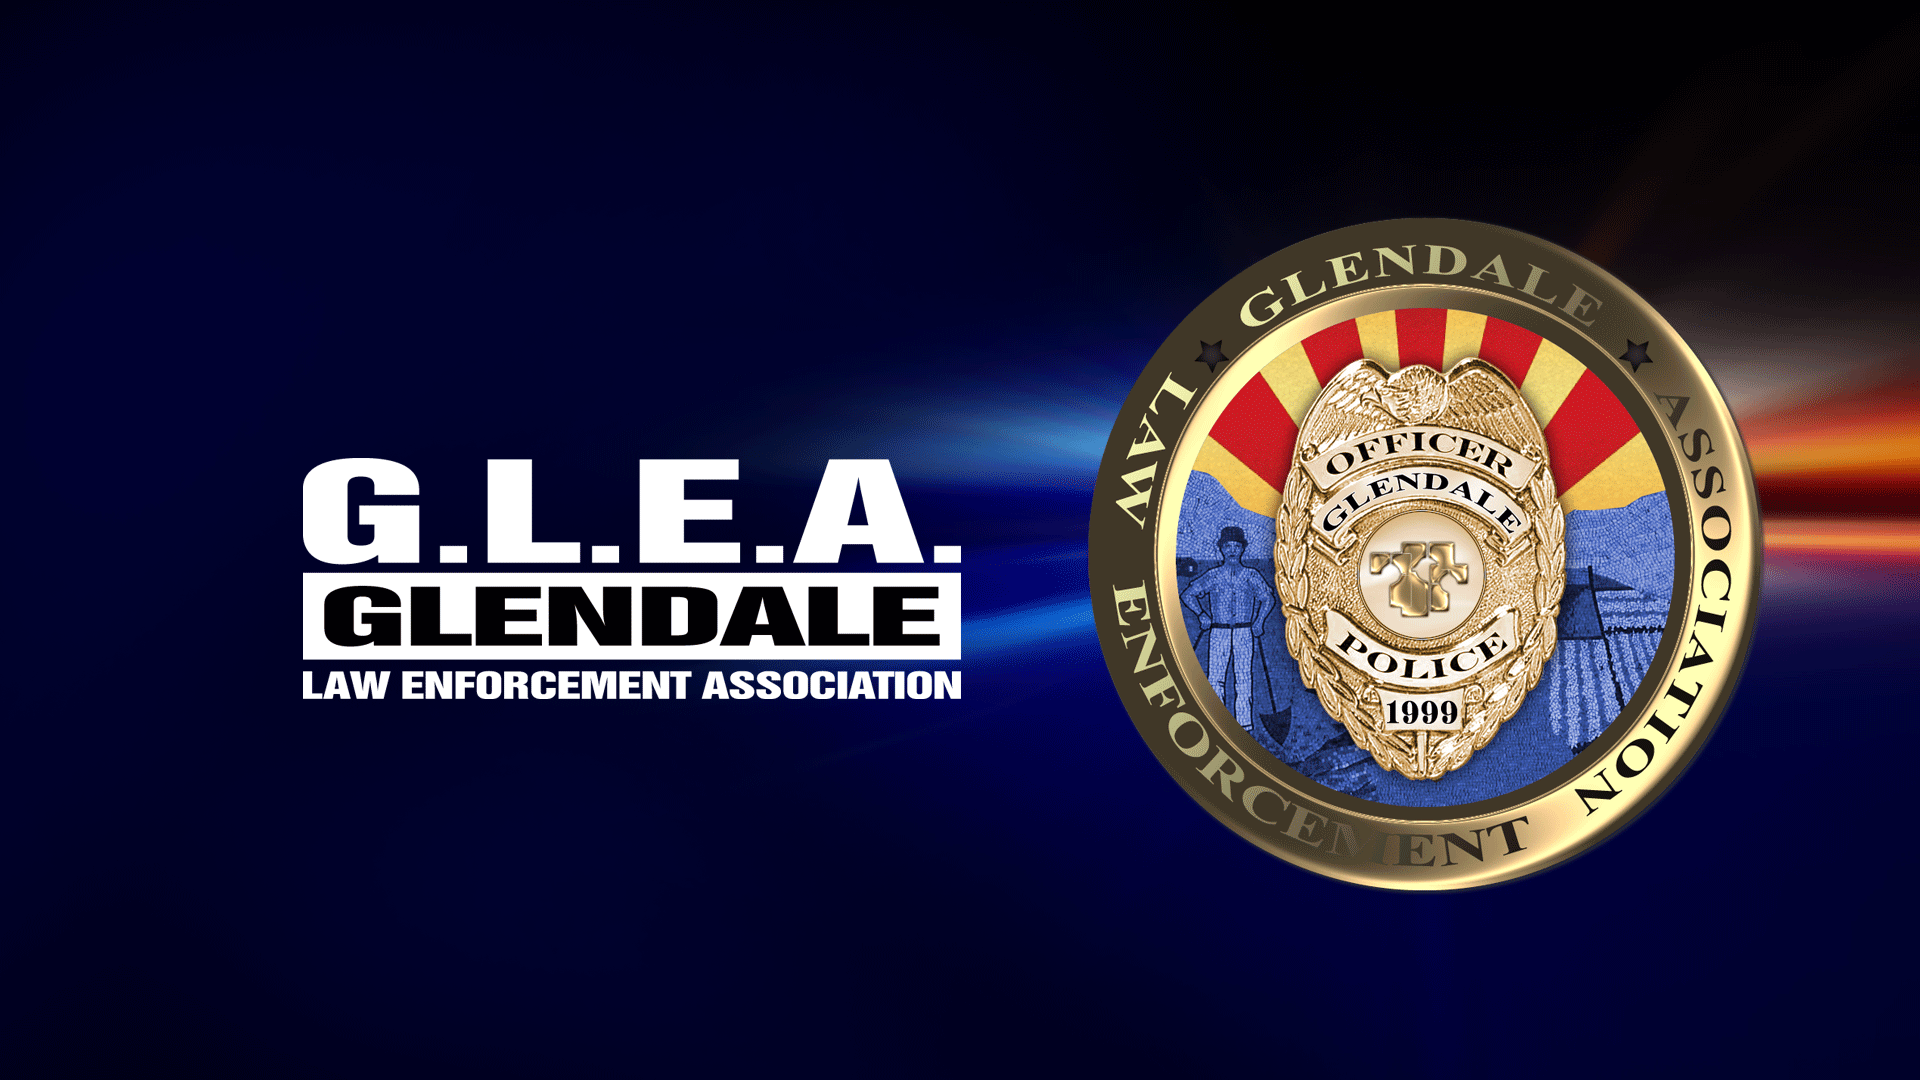 Glendale Law Enforcement Association Wallpaper